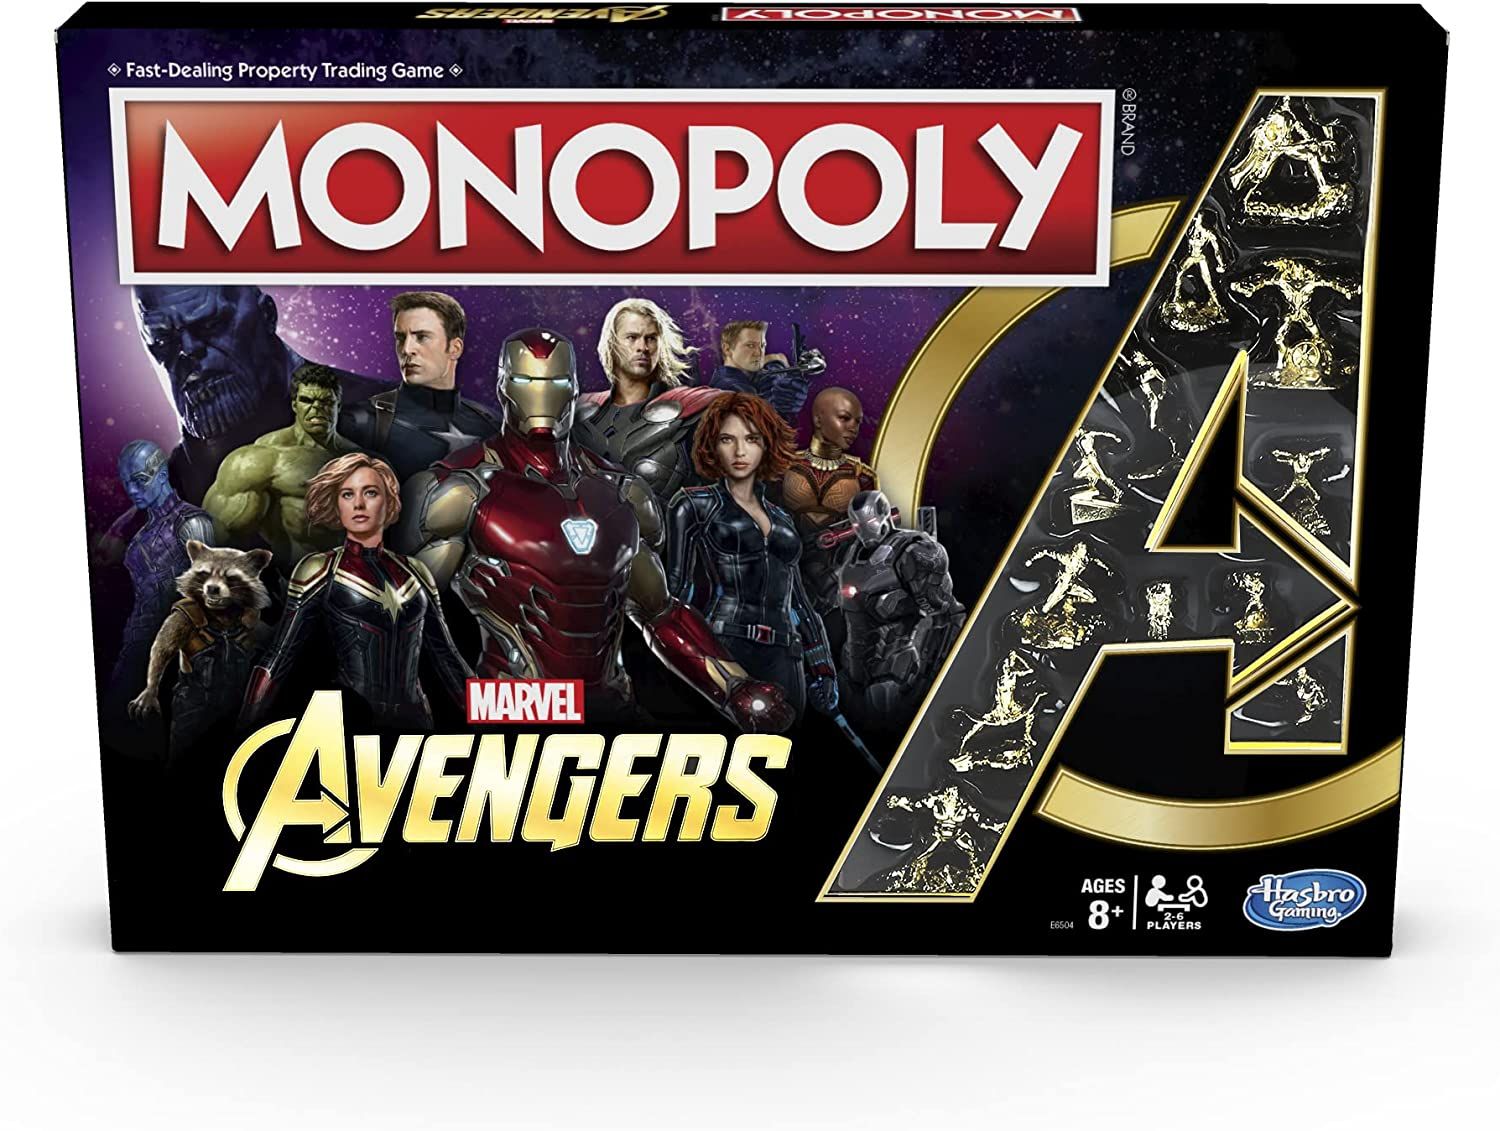 Monopoly Marvel Avengers Edition